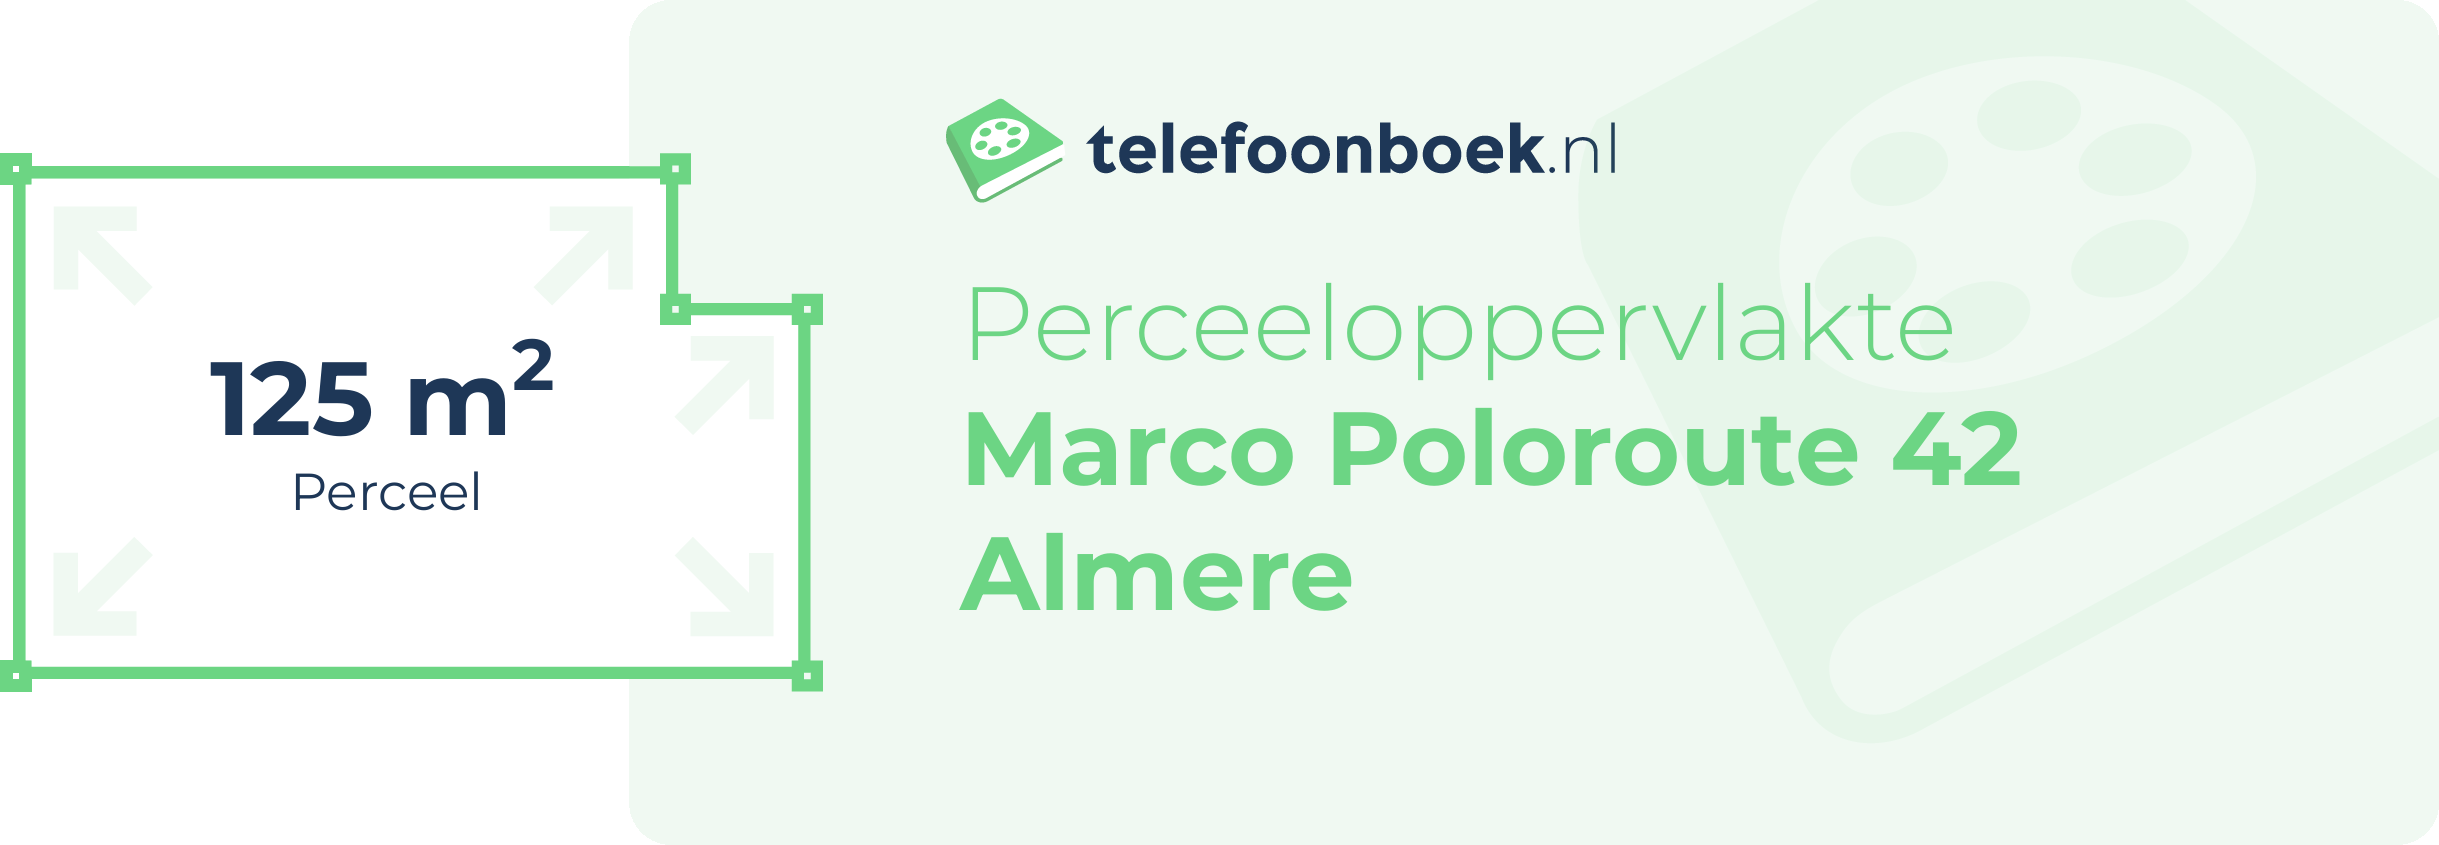 Perceeloppervlakte Marco Poloroute 42 Almere